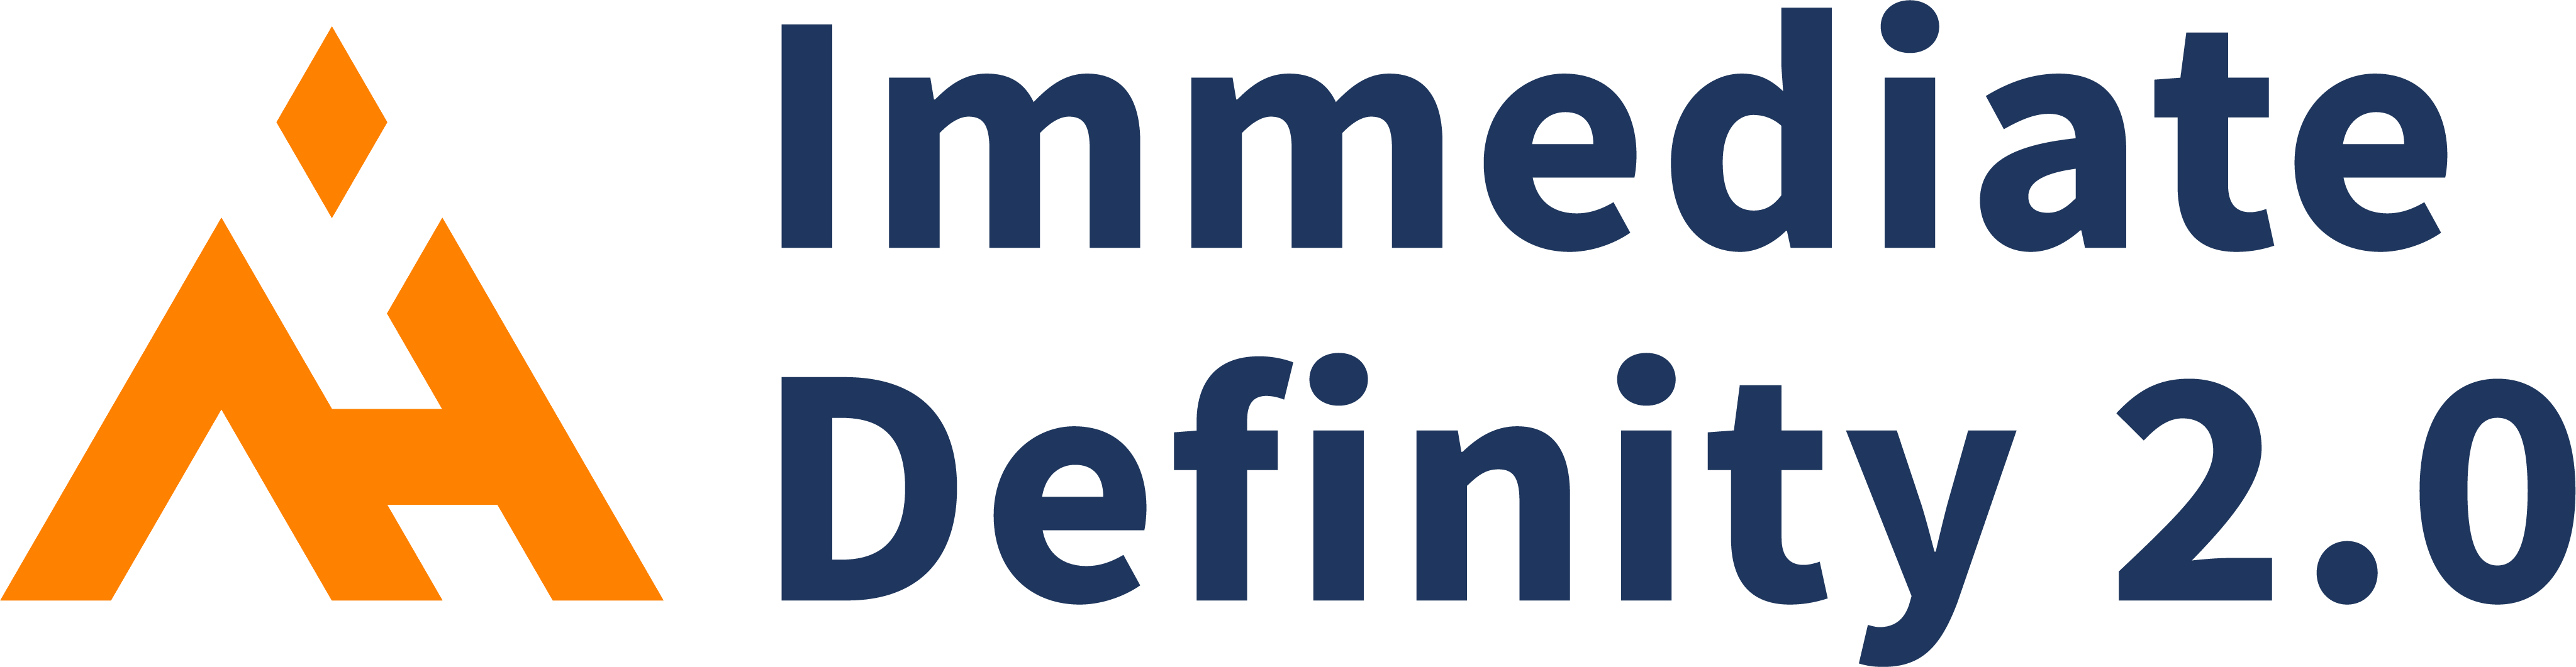 Logotipo Definido Imediato 2.0